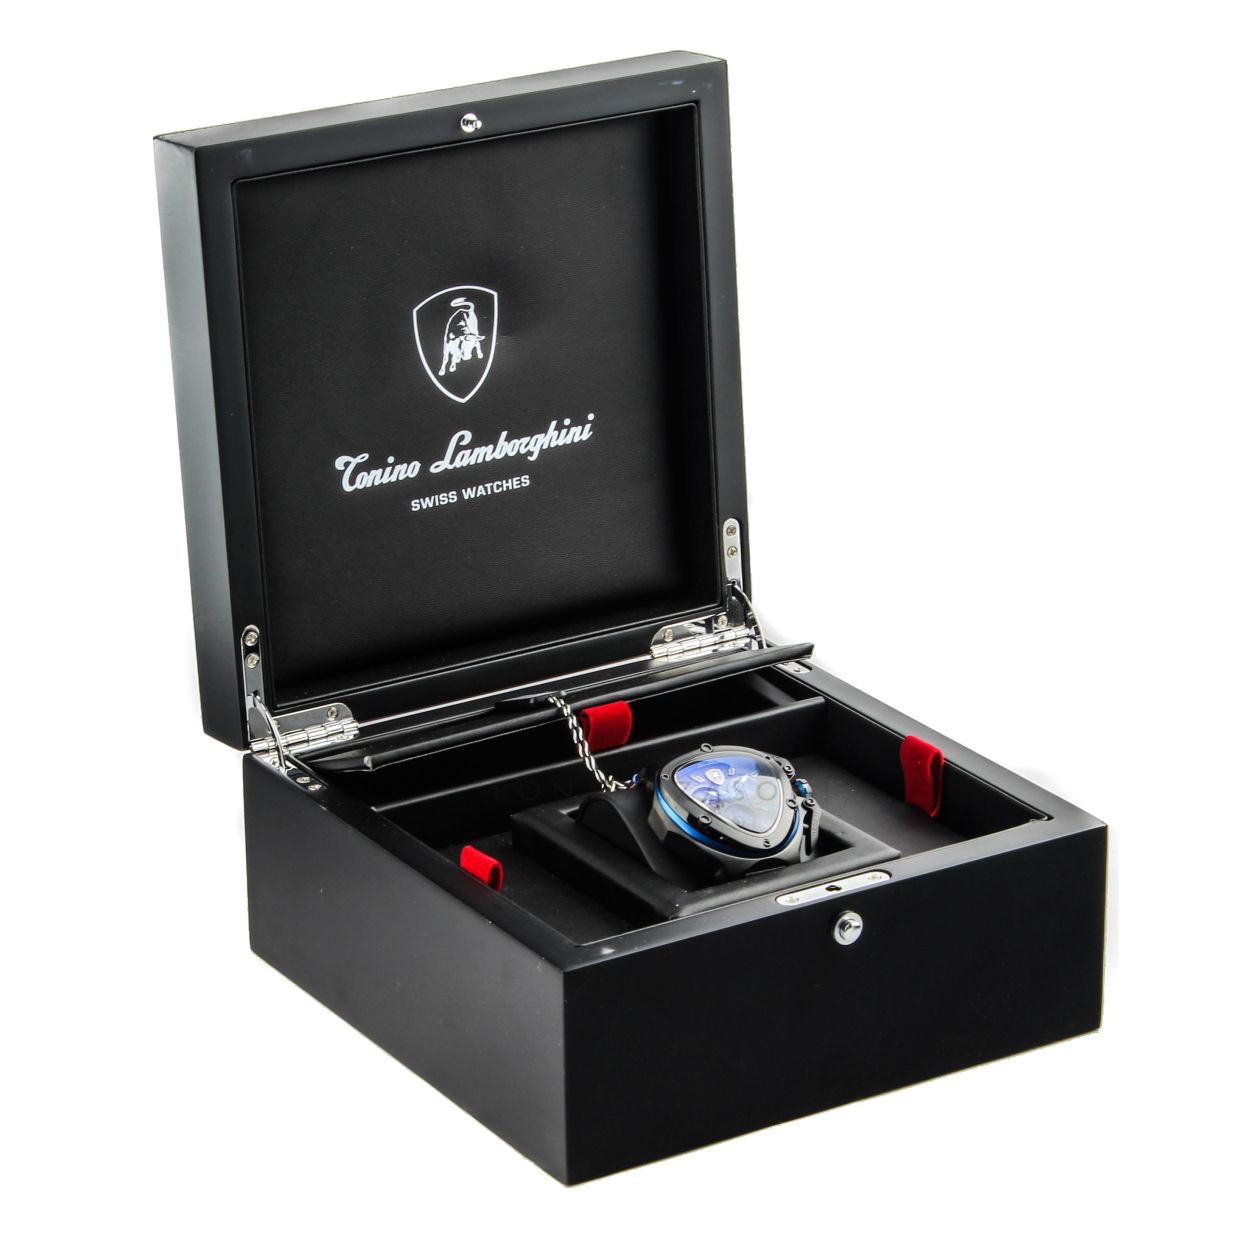 Zegarek męski Tonino Lamborghini T9XB Spyder + Dodatkowy pasek